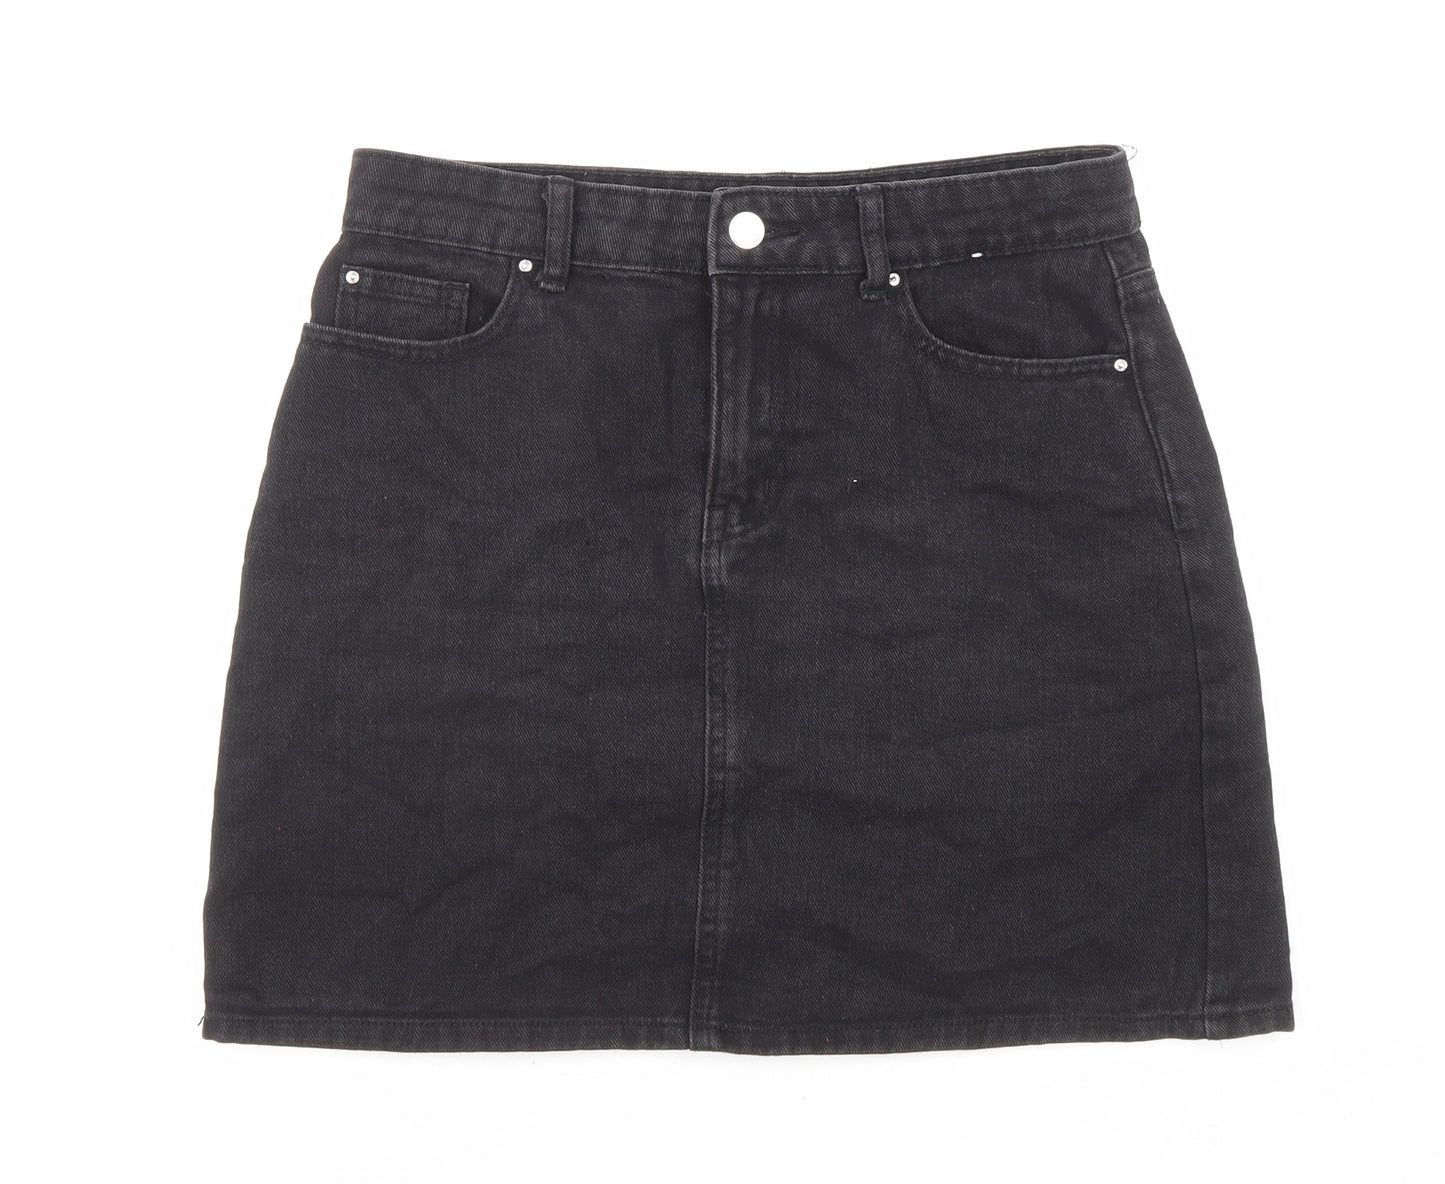 Denim & Co. Womens Black Cotton A-Line Skirt Size 10 Zip